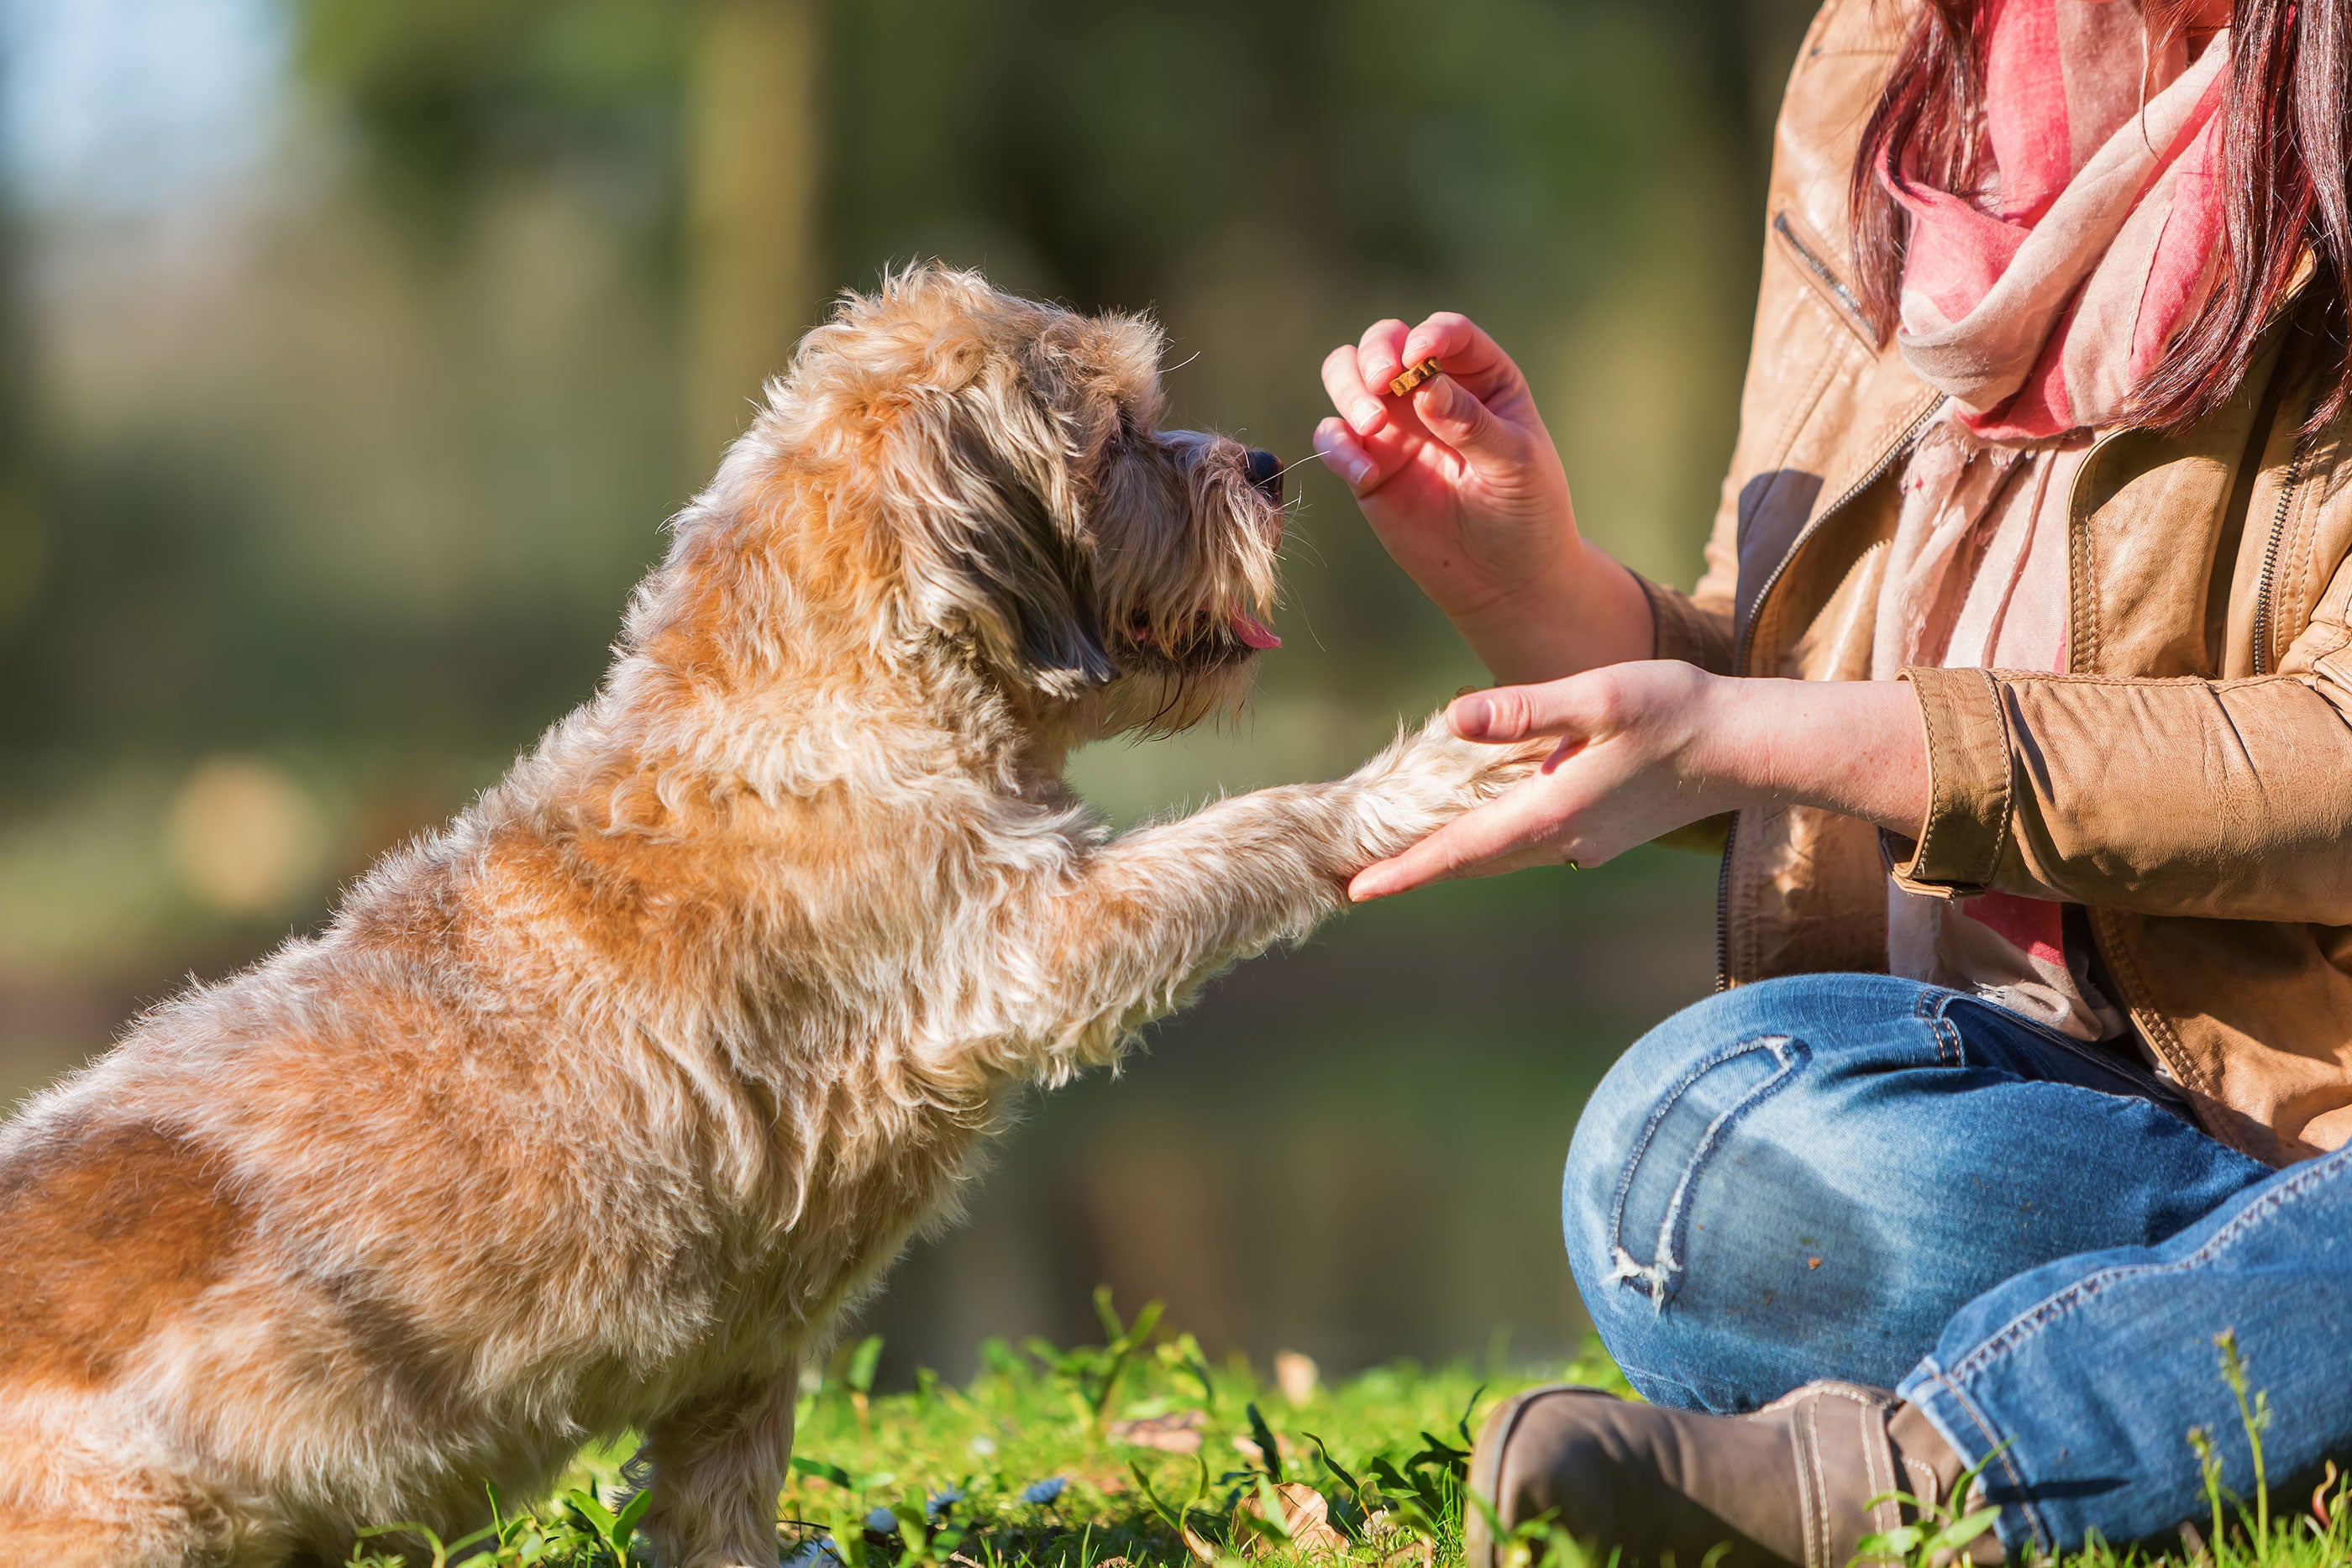 woman sitting with legs crossed on grass feeding a dog a treat